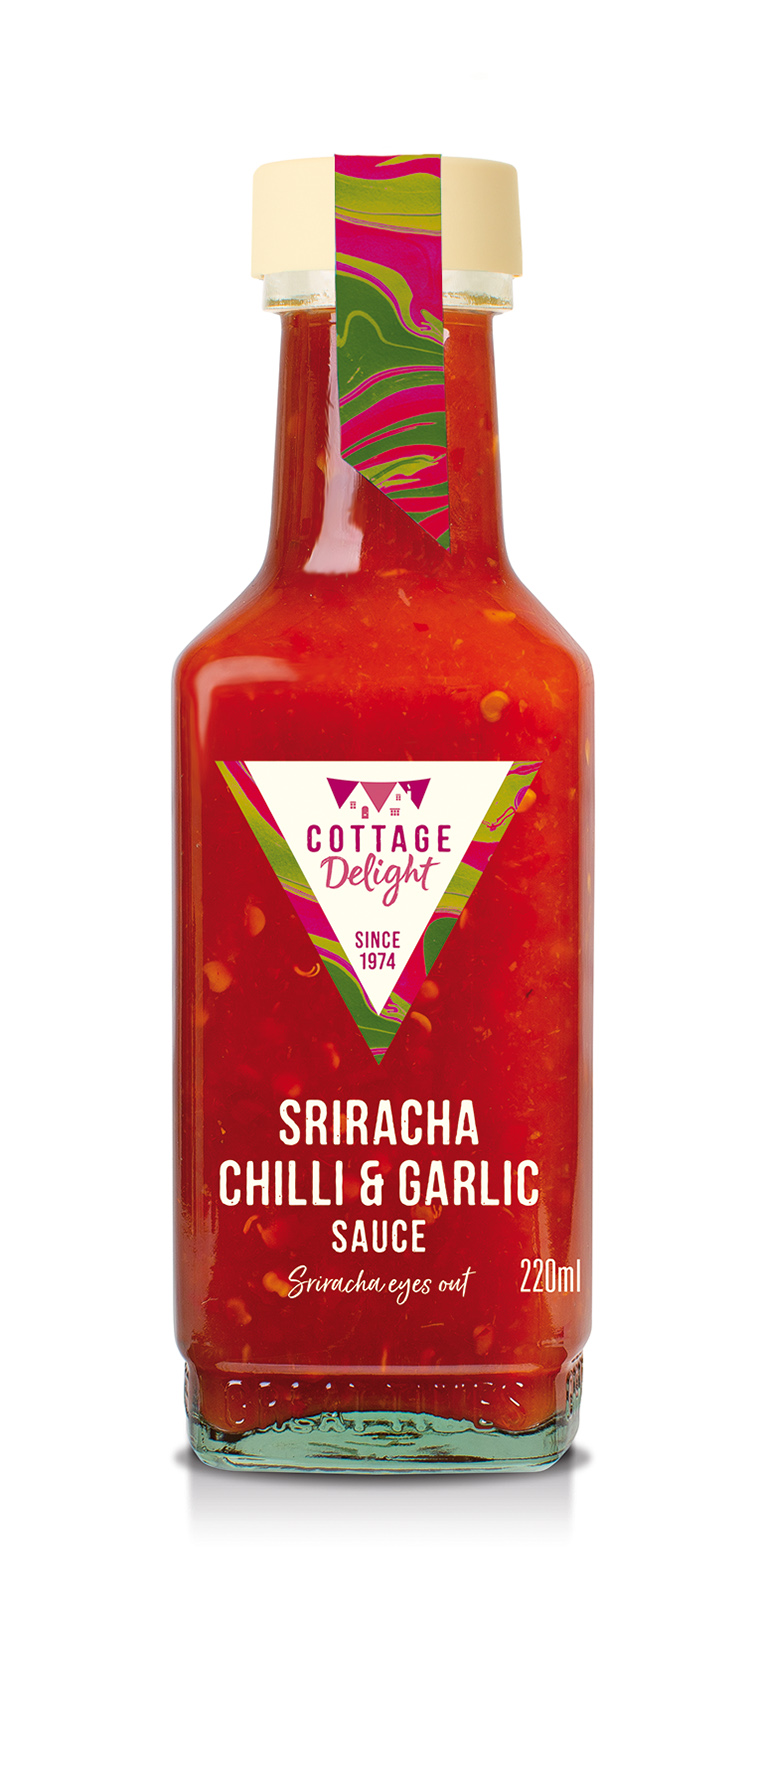 Sriracha Chilli & Garlic Sauce